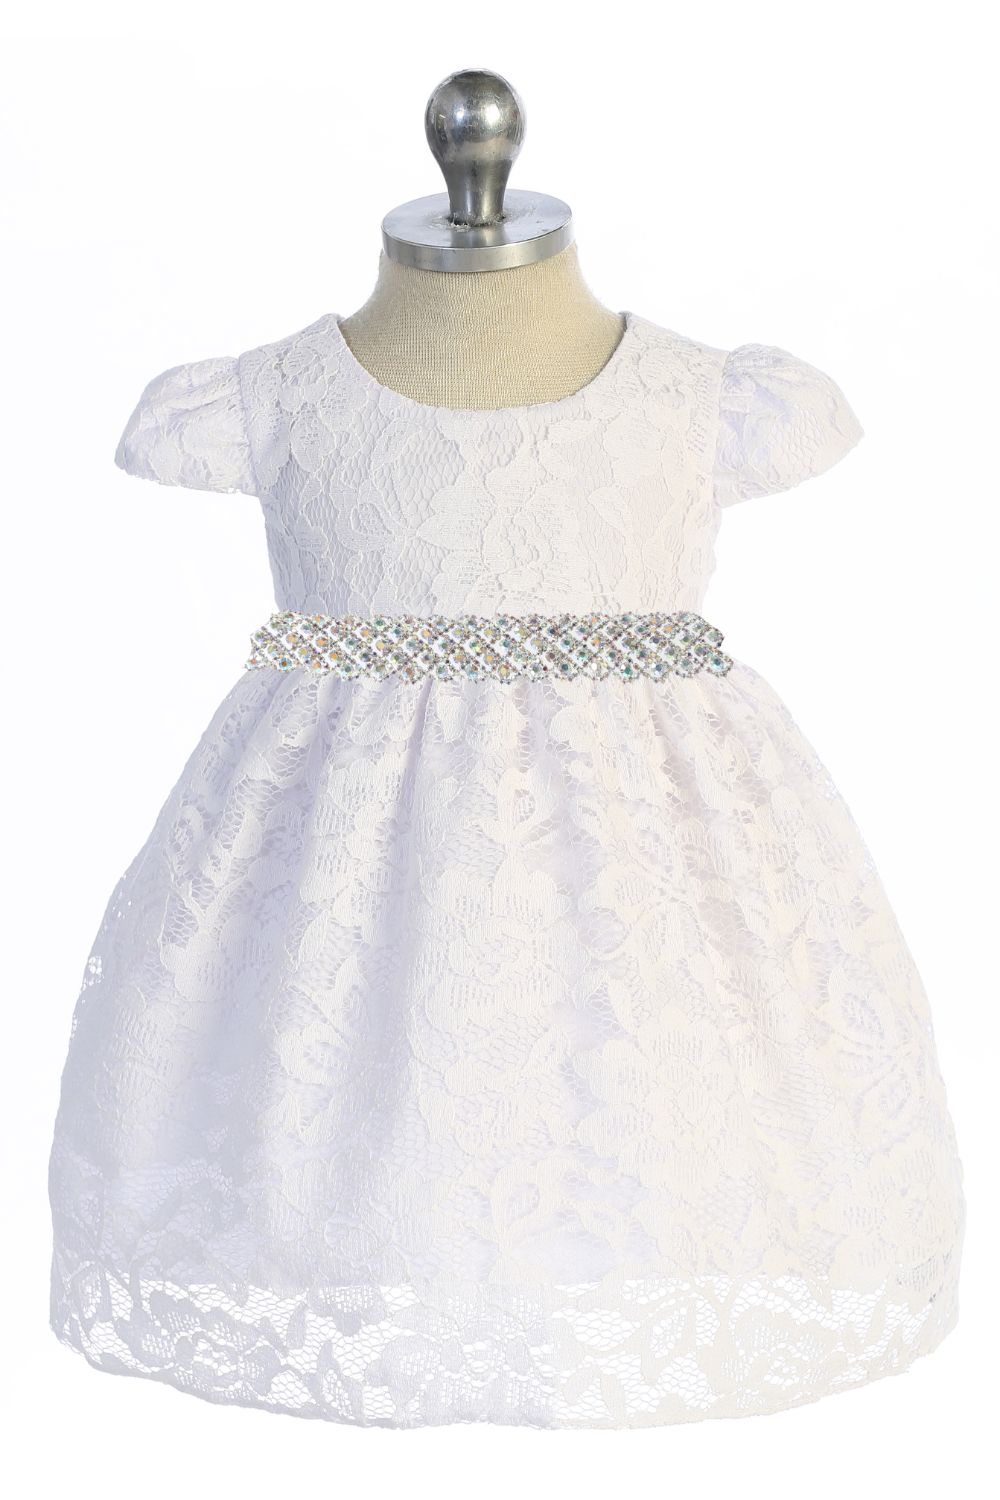 Dress - Lace V Back Bow Baby Dress W/ Thick Rhinestone Trim